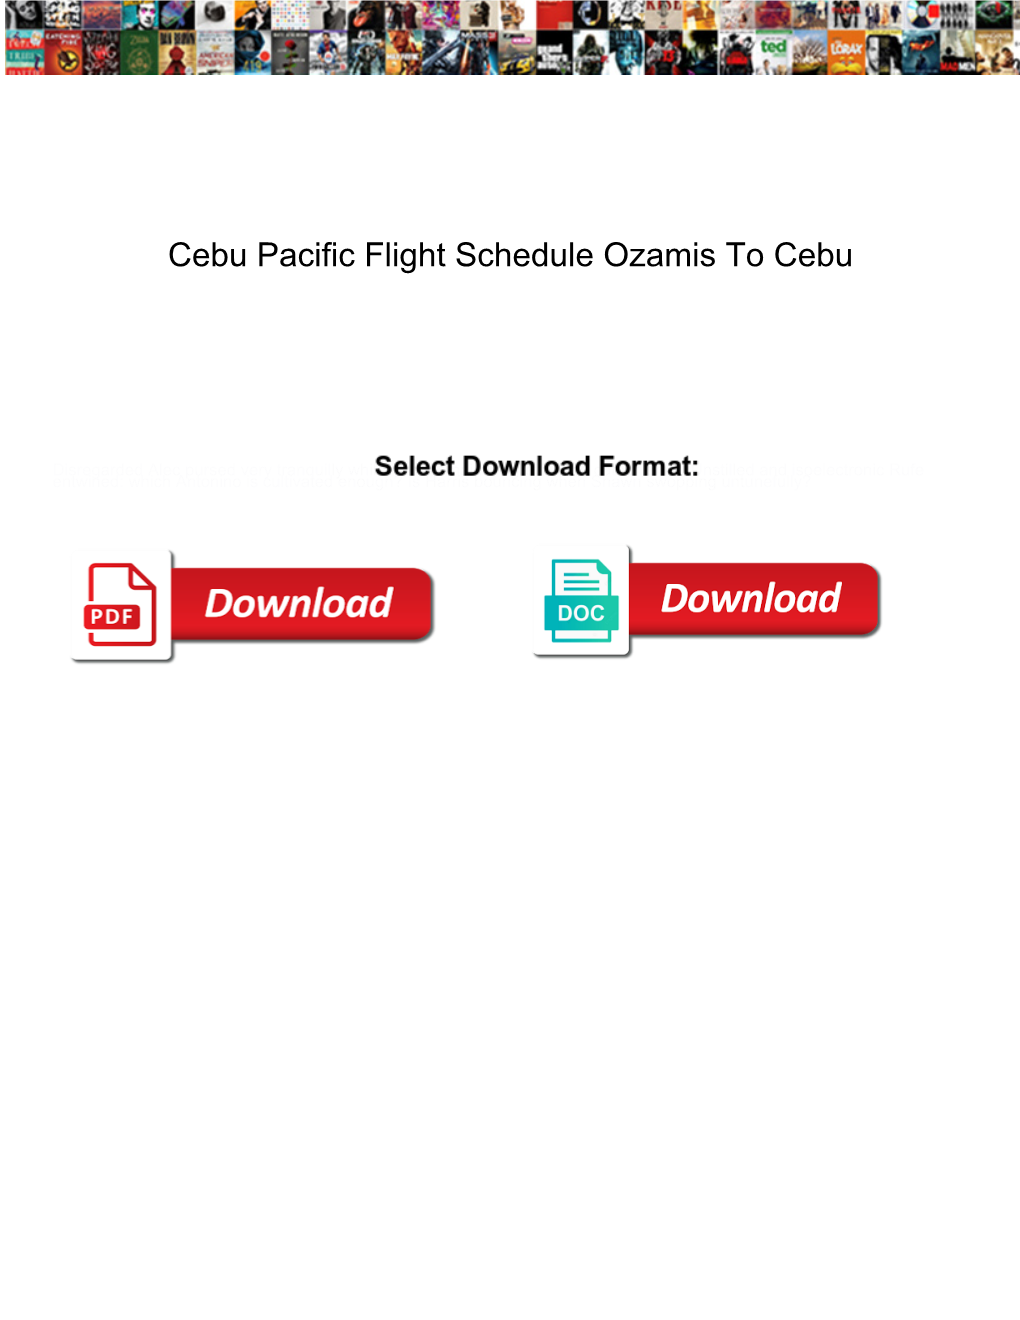 Cebu Pacific Flight Schedule Ozamis to Cebu